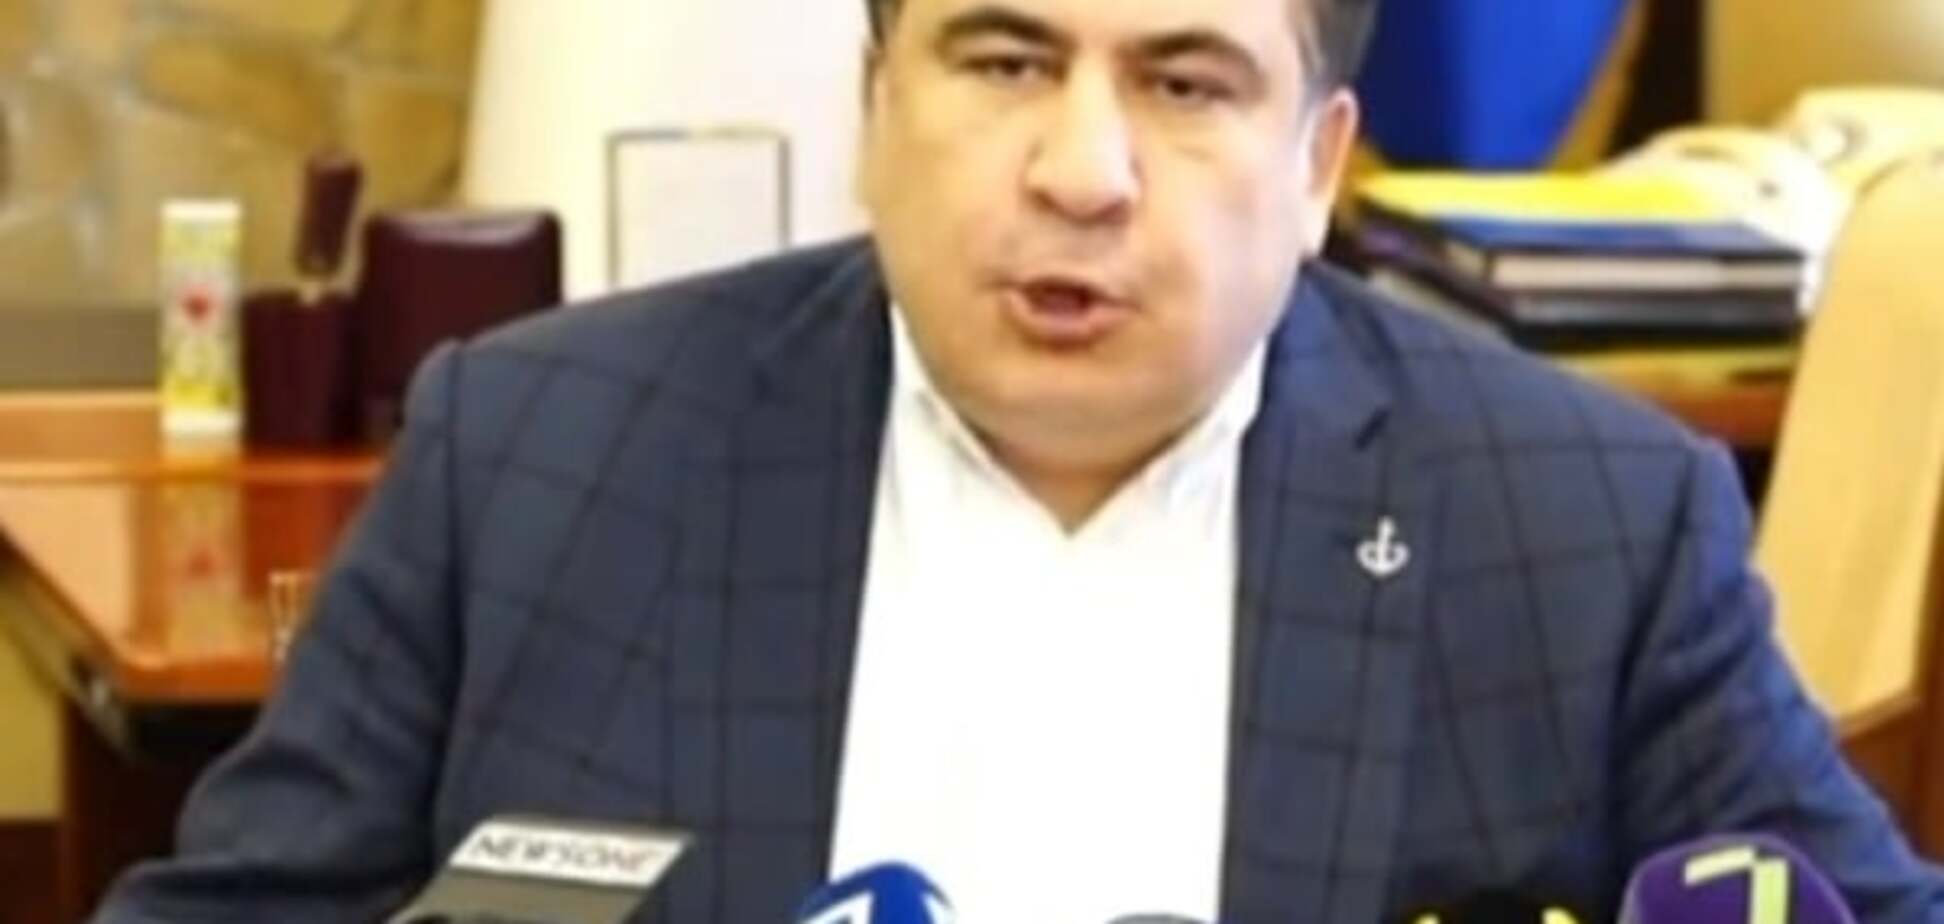 Оратор от Бога: Саакашвили рассмешил соцсети своим украинским произношением. Видеофакт